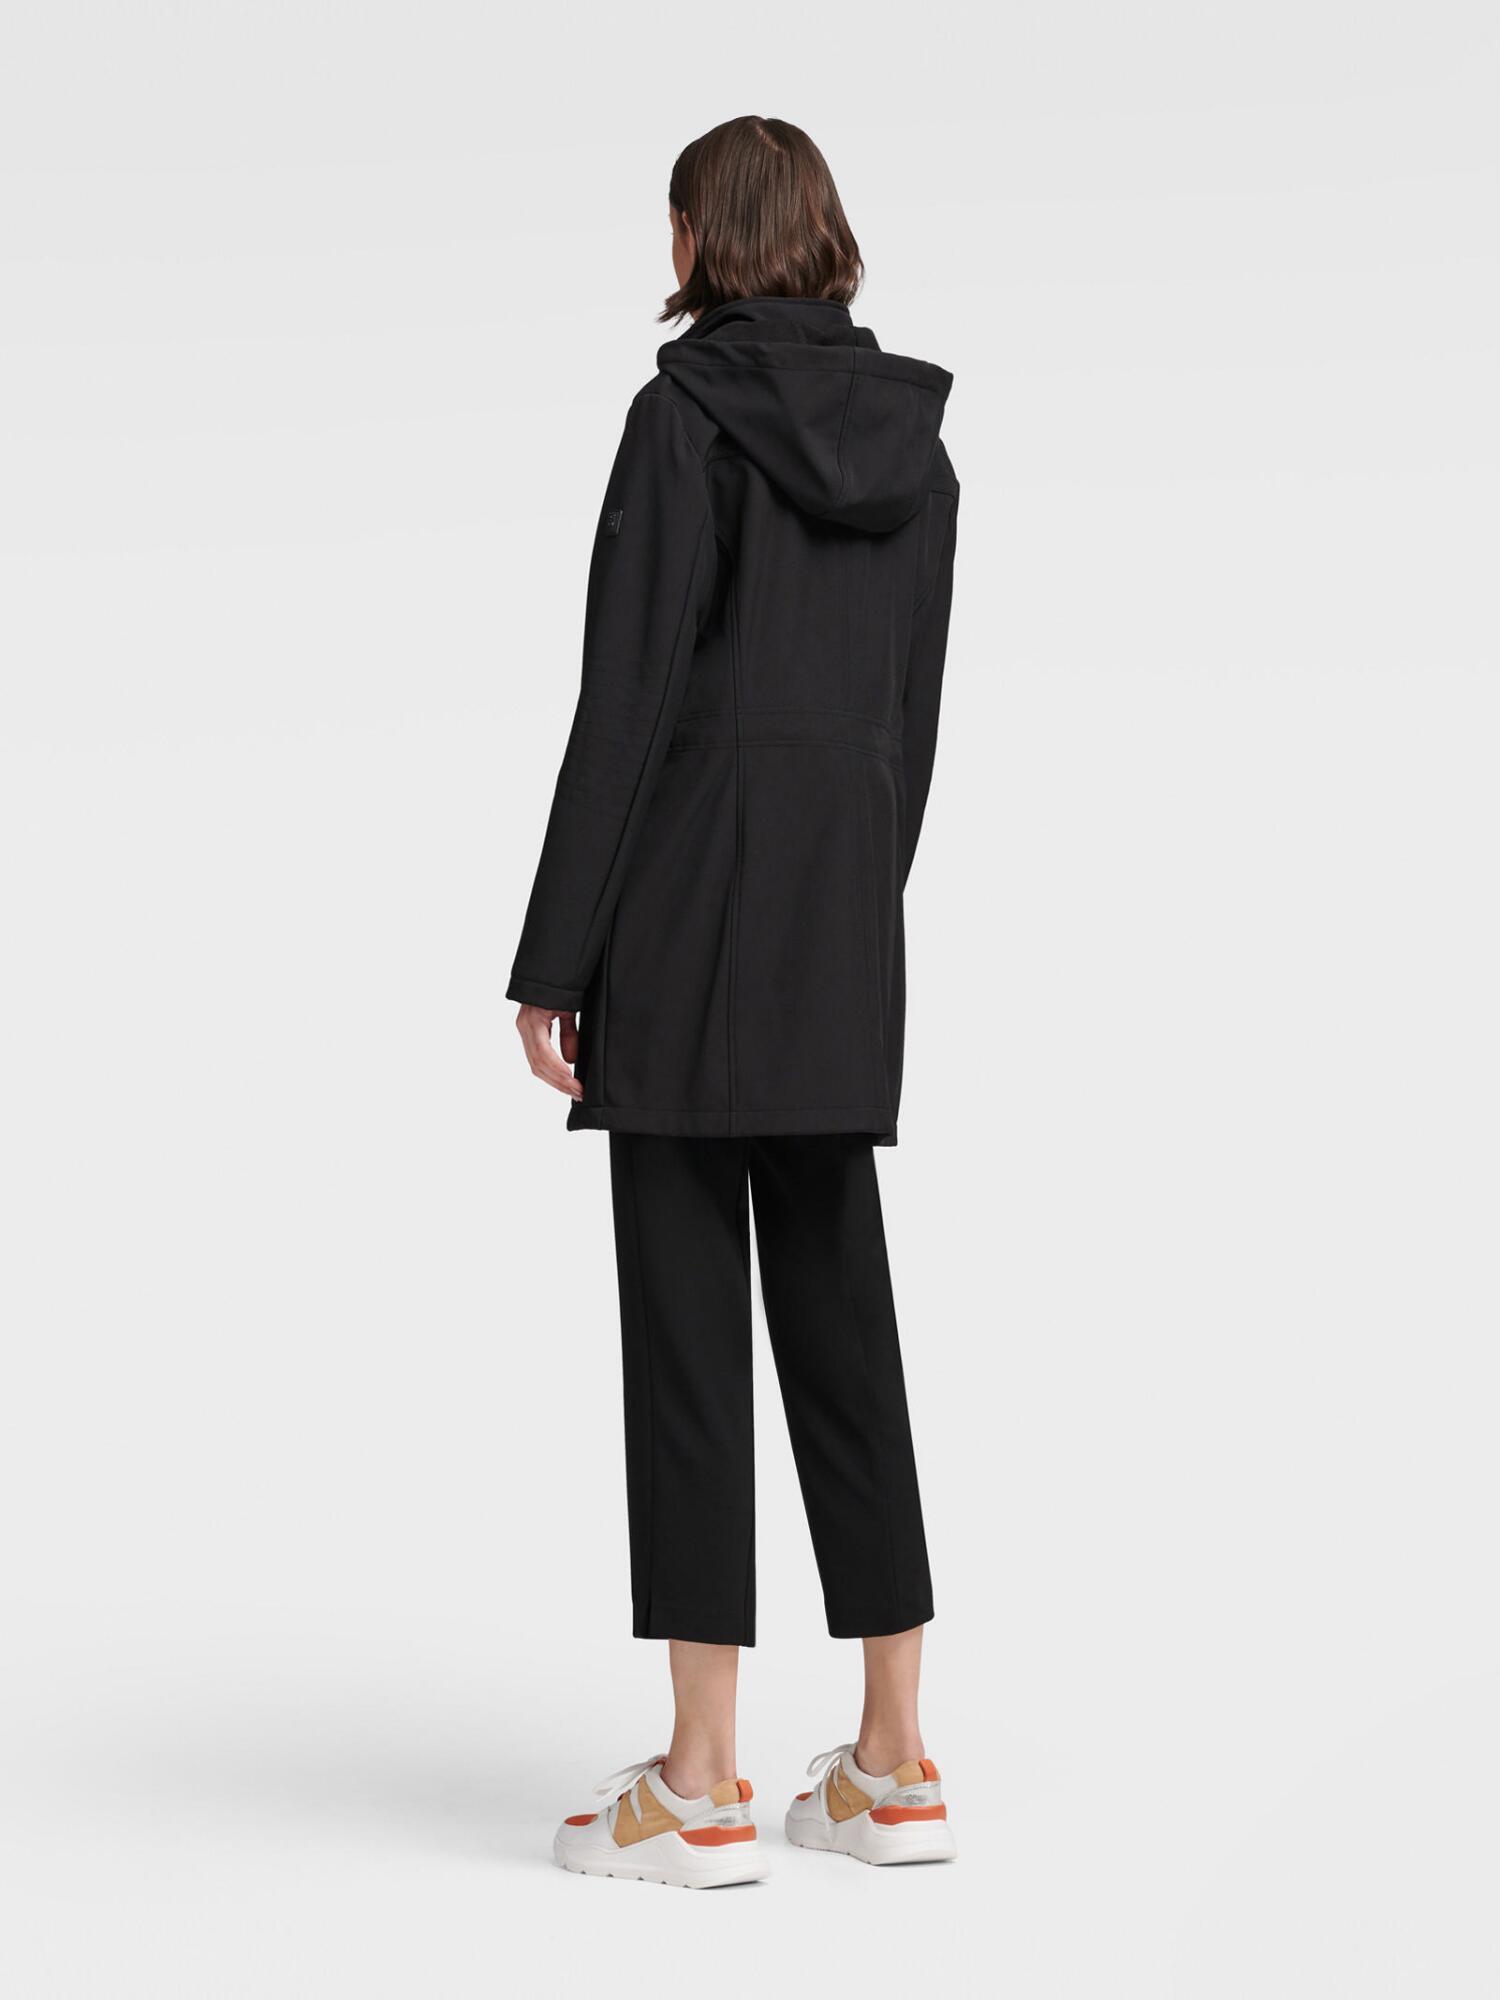 DKNY Hooded Soft Shell Jacket in Black - Lyst